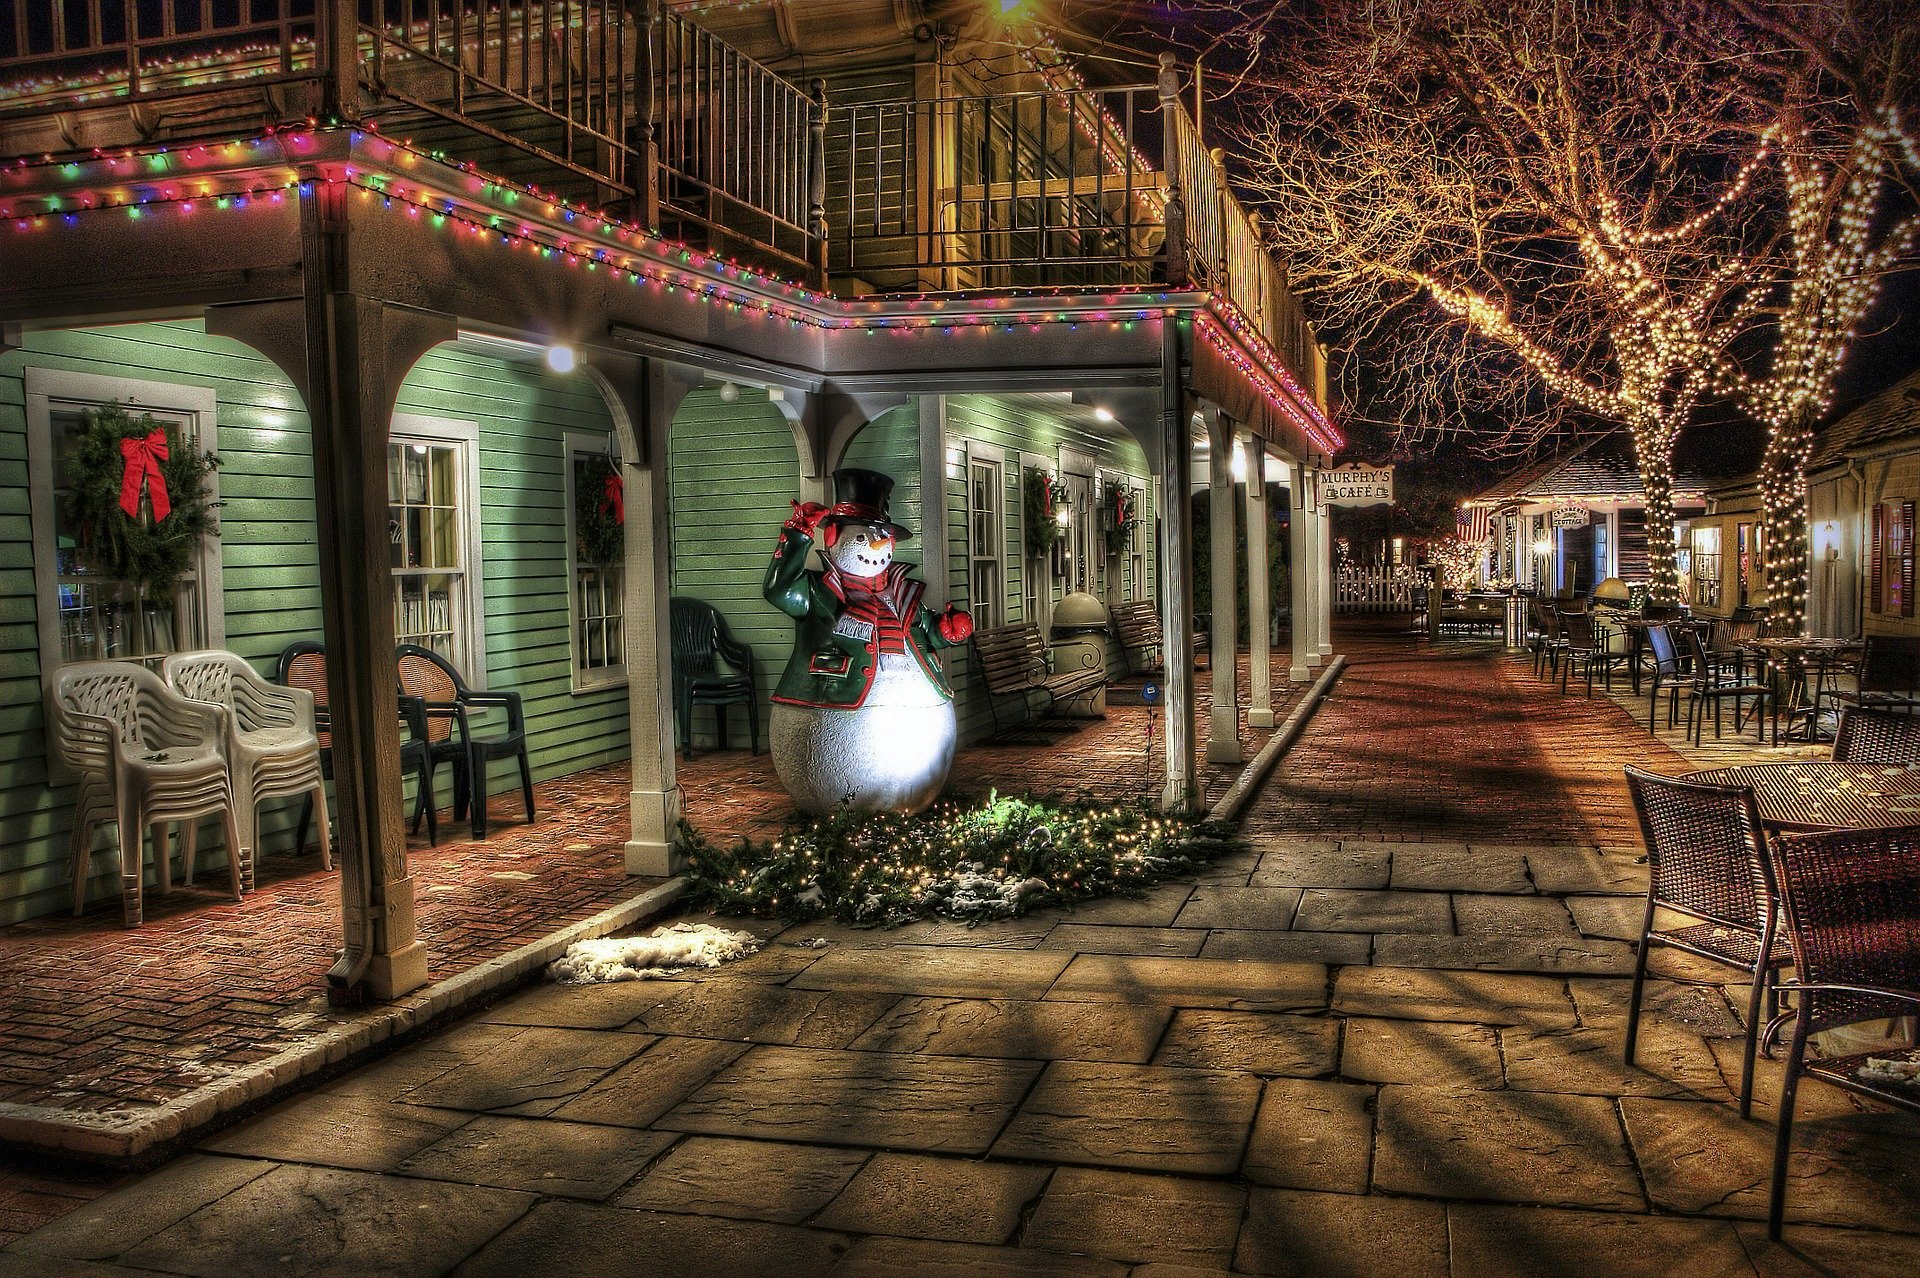 Dahlonega: The Best Christmas Town Near Atlanta